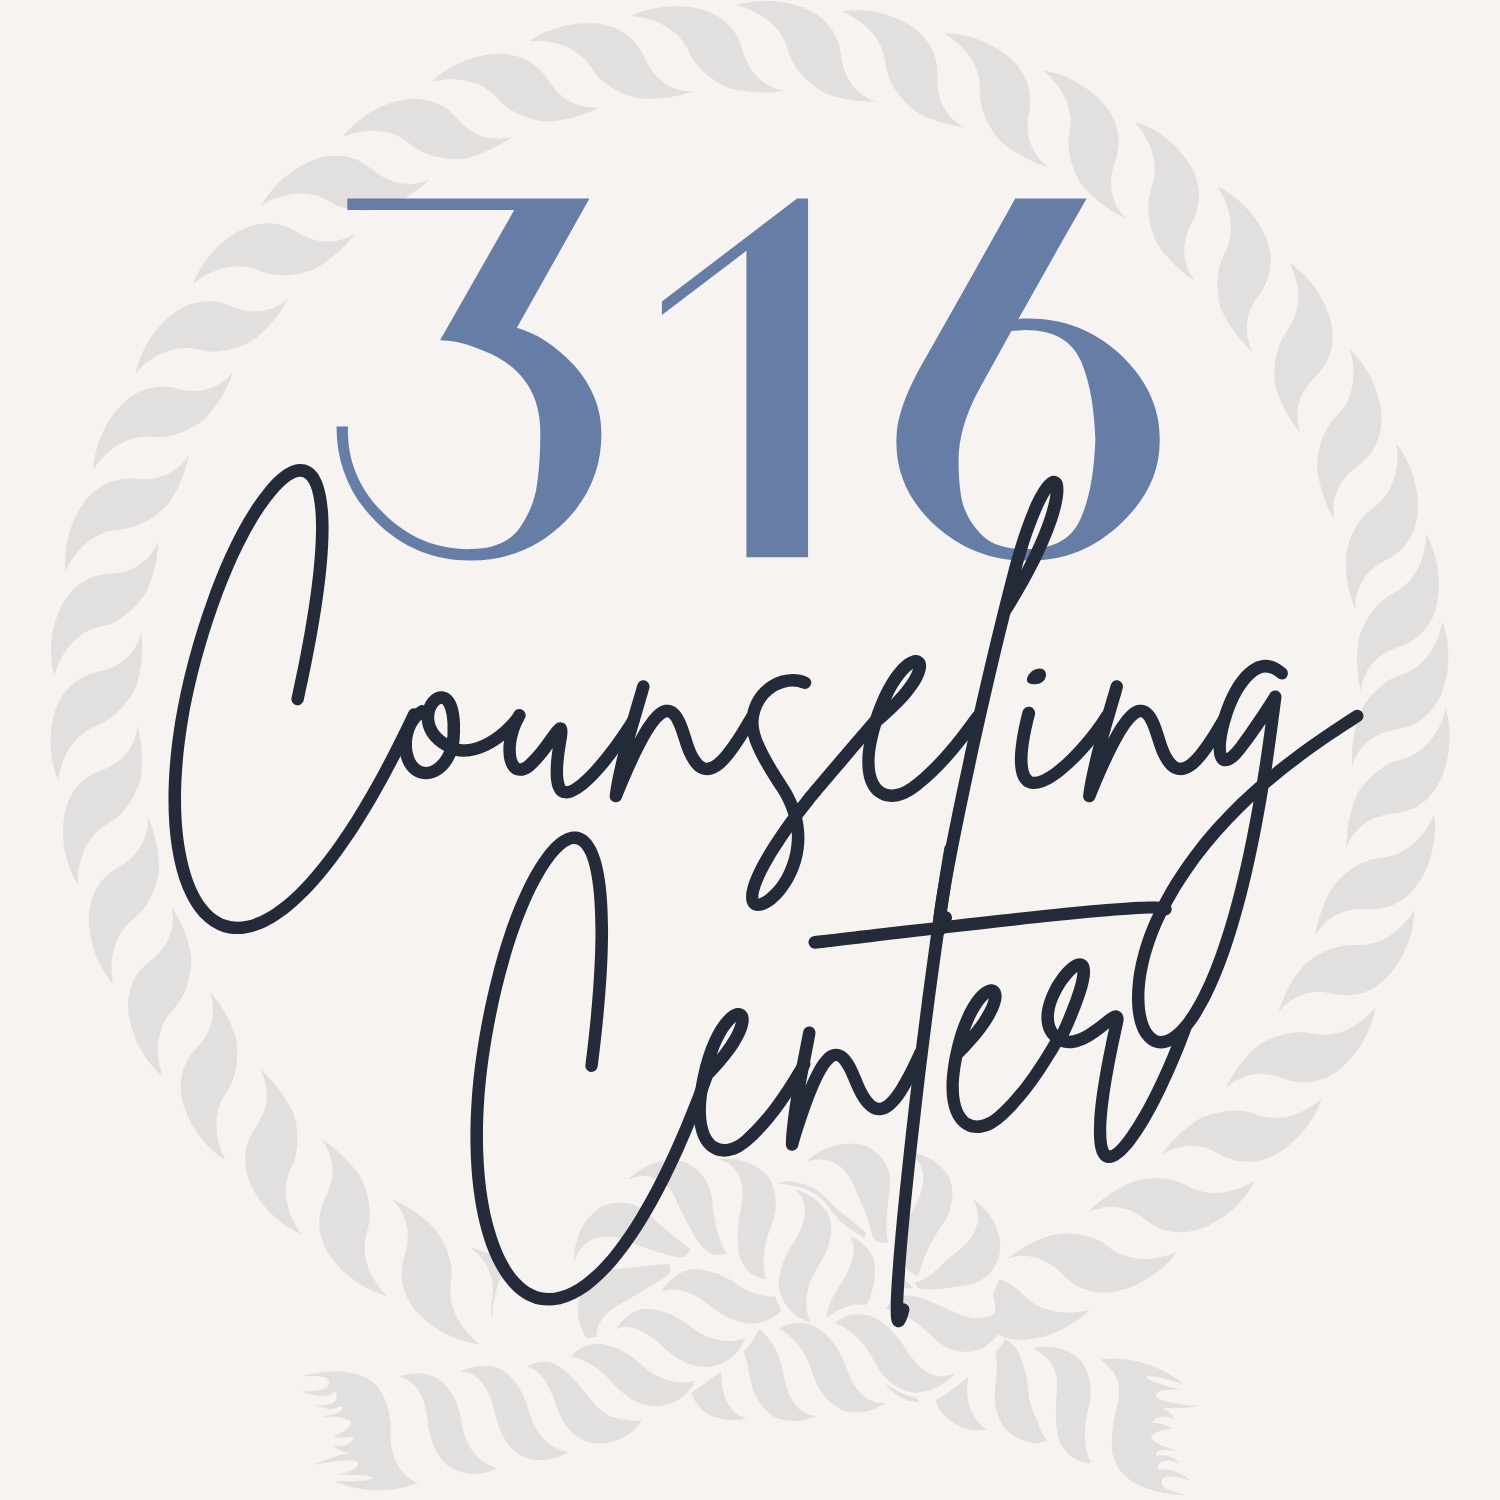 316 Counseling Center logo